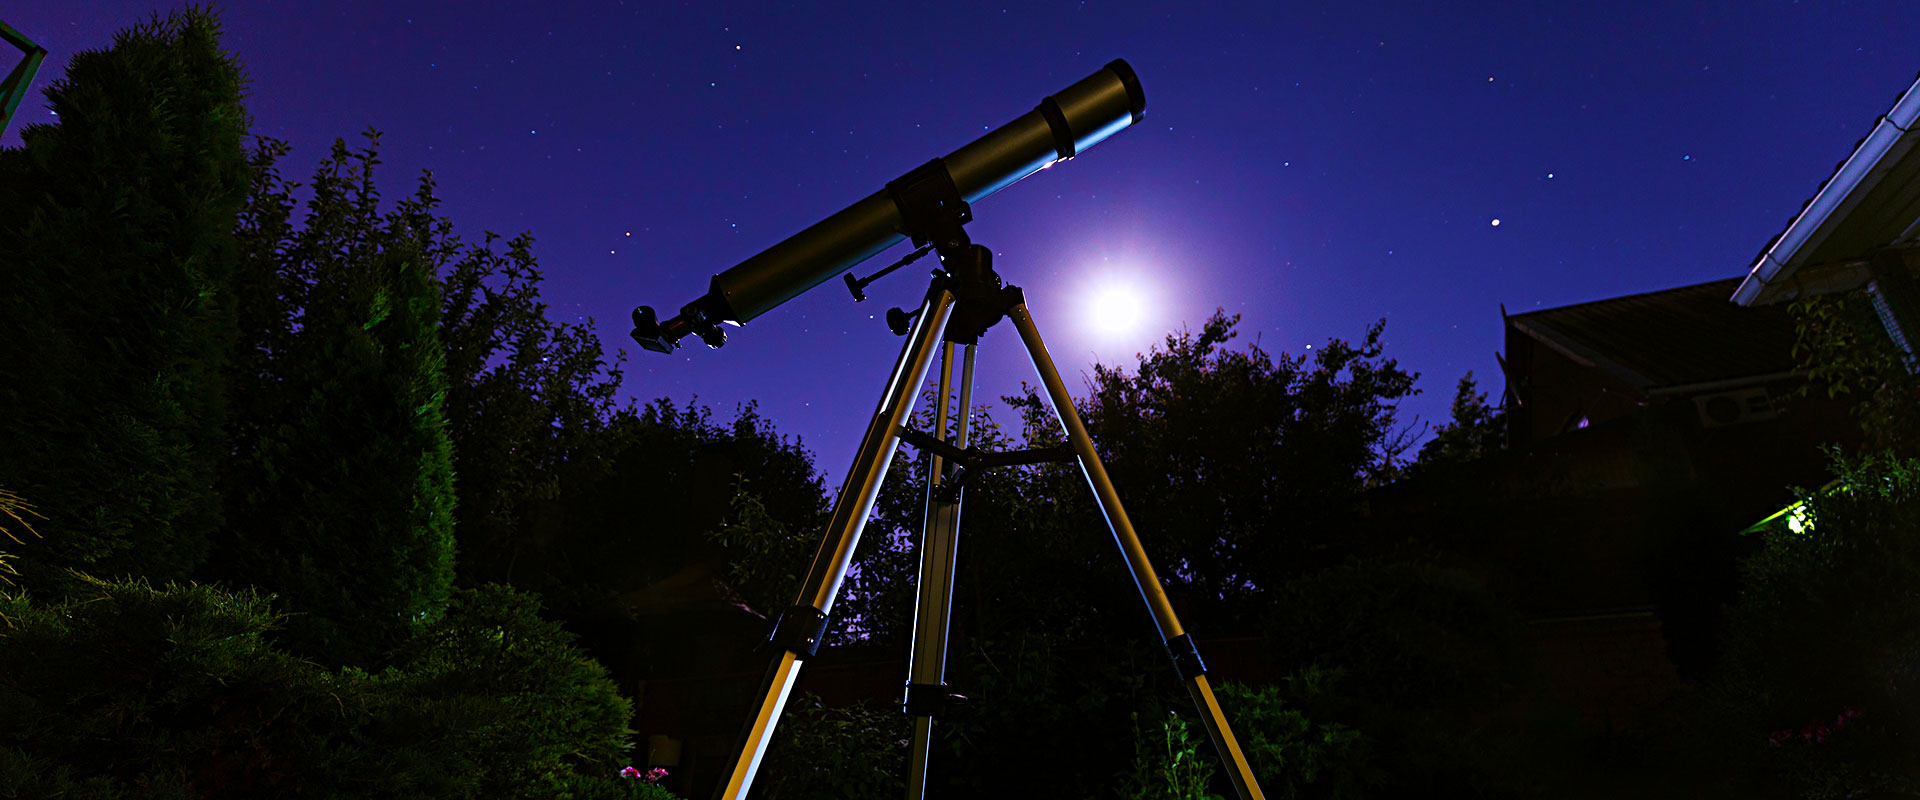 Backyard astronomy for beginners